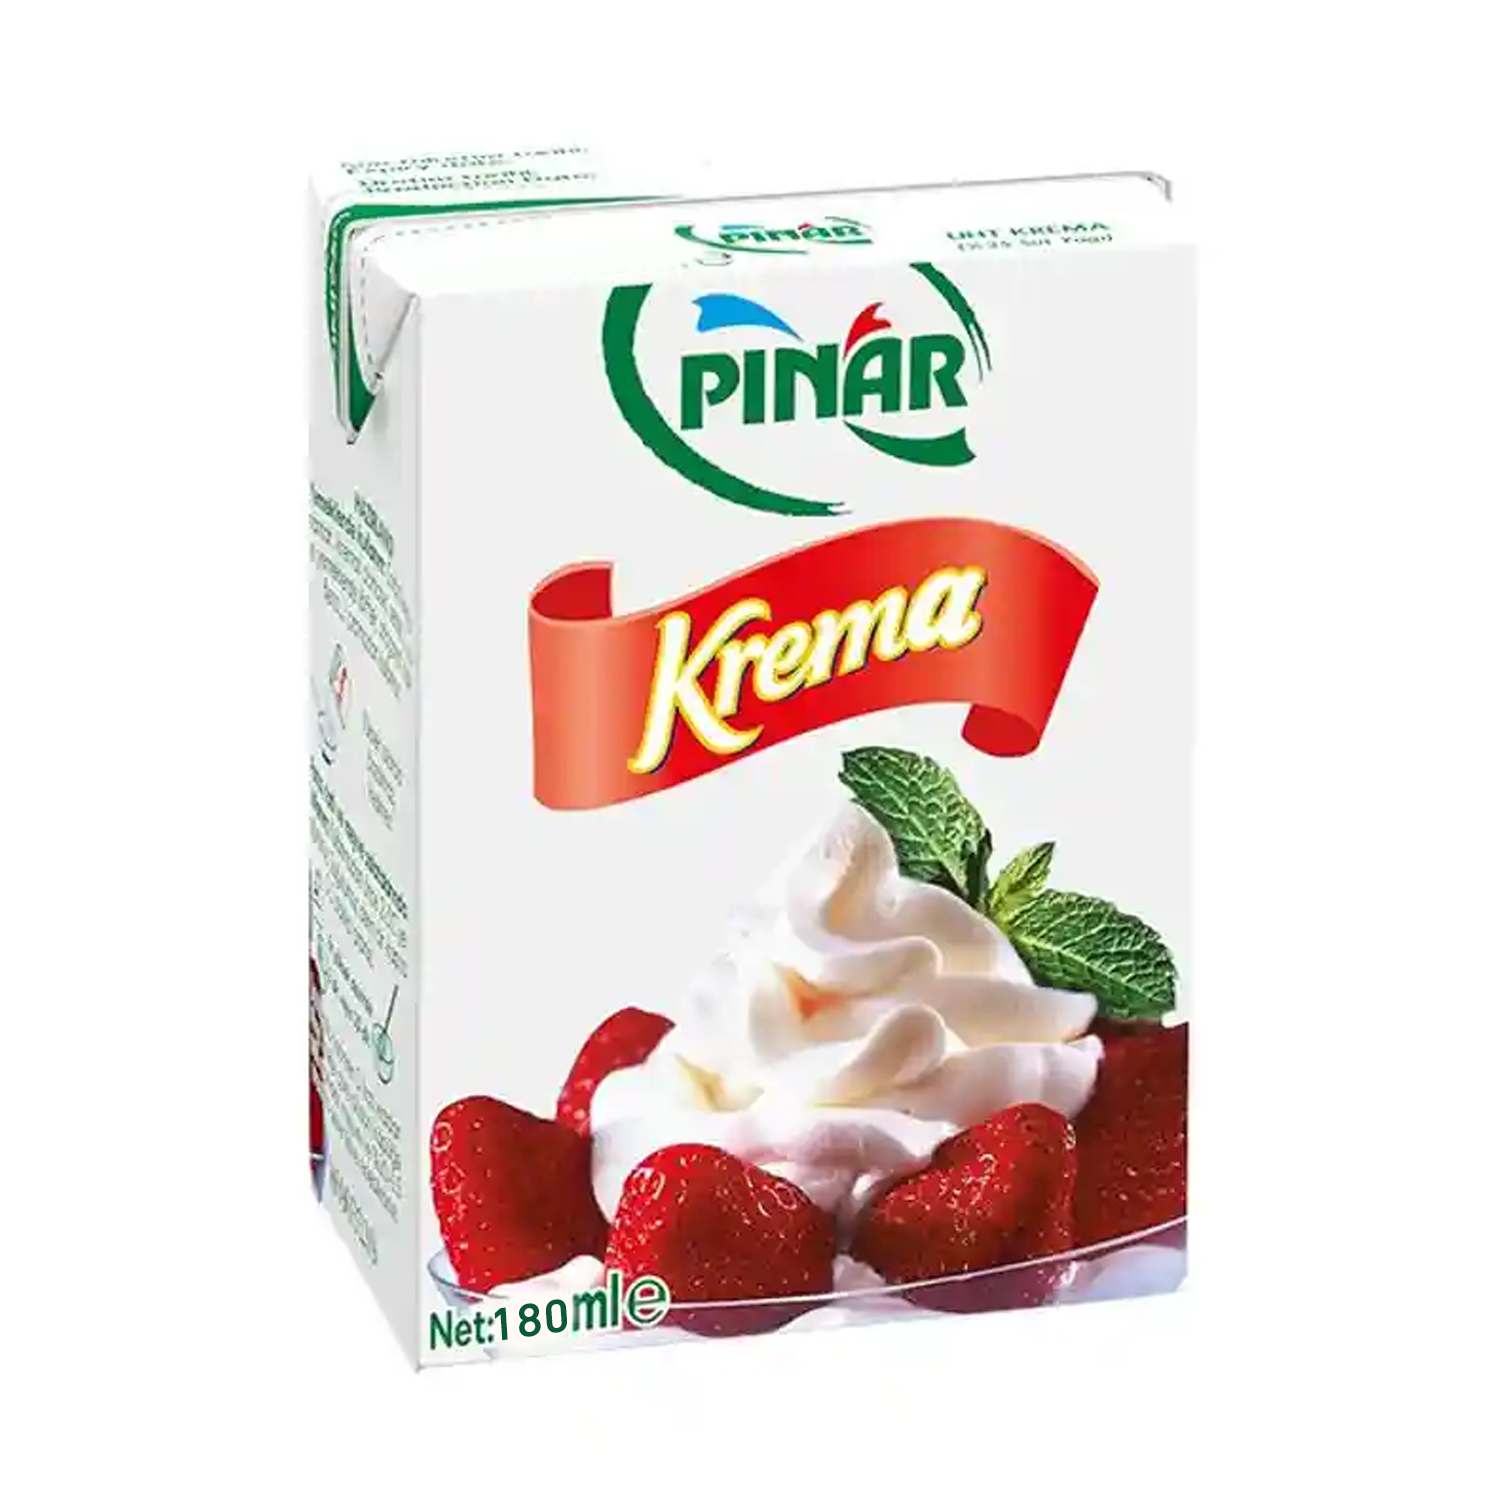 Pınar Krema 180 ML